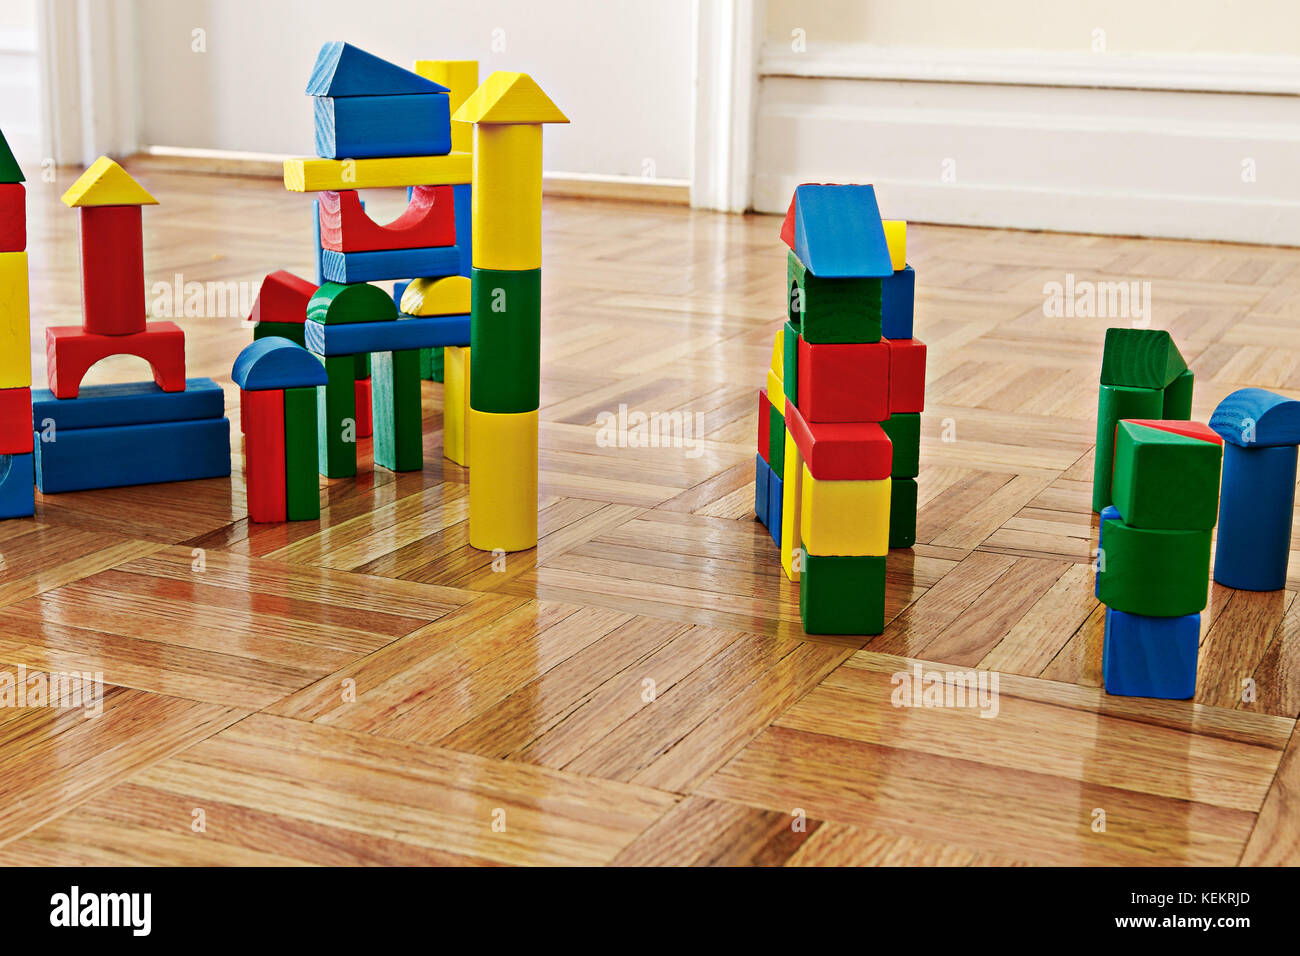 Colorful wooden building blocks on hardwood floor. Stock Photo